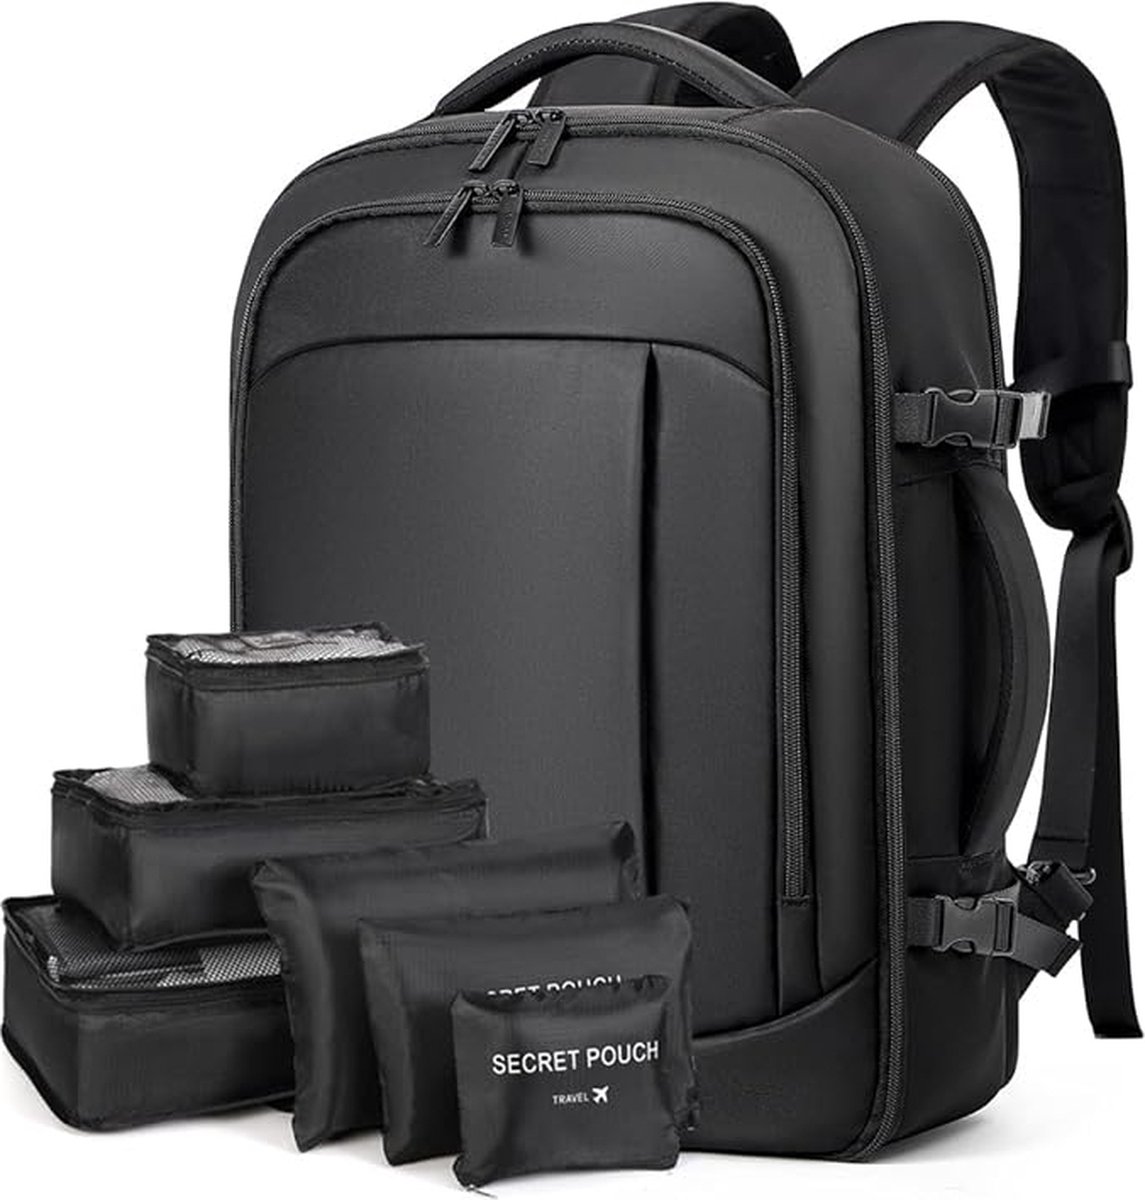 SHOP YOLO - Rugzak Dames reizen -Handbagage- 6-delige kledingzakken- waterdichte -17.3 inch laptop met USB - Zwart